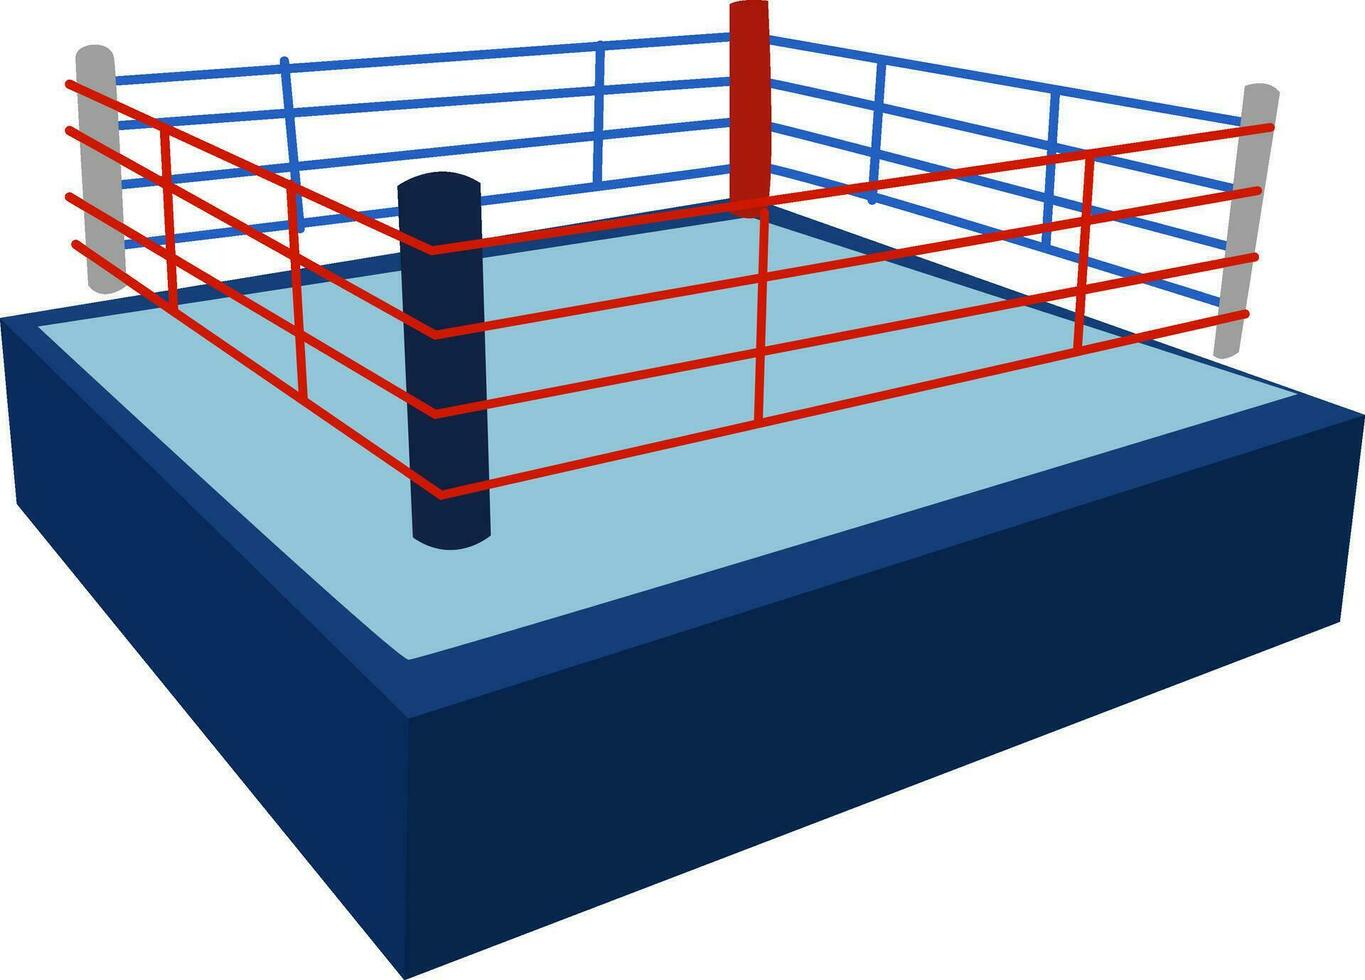 Boxing ring, illustration, vector on white background